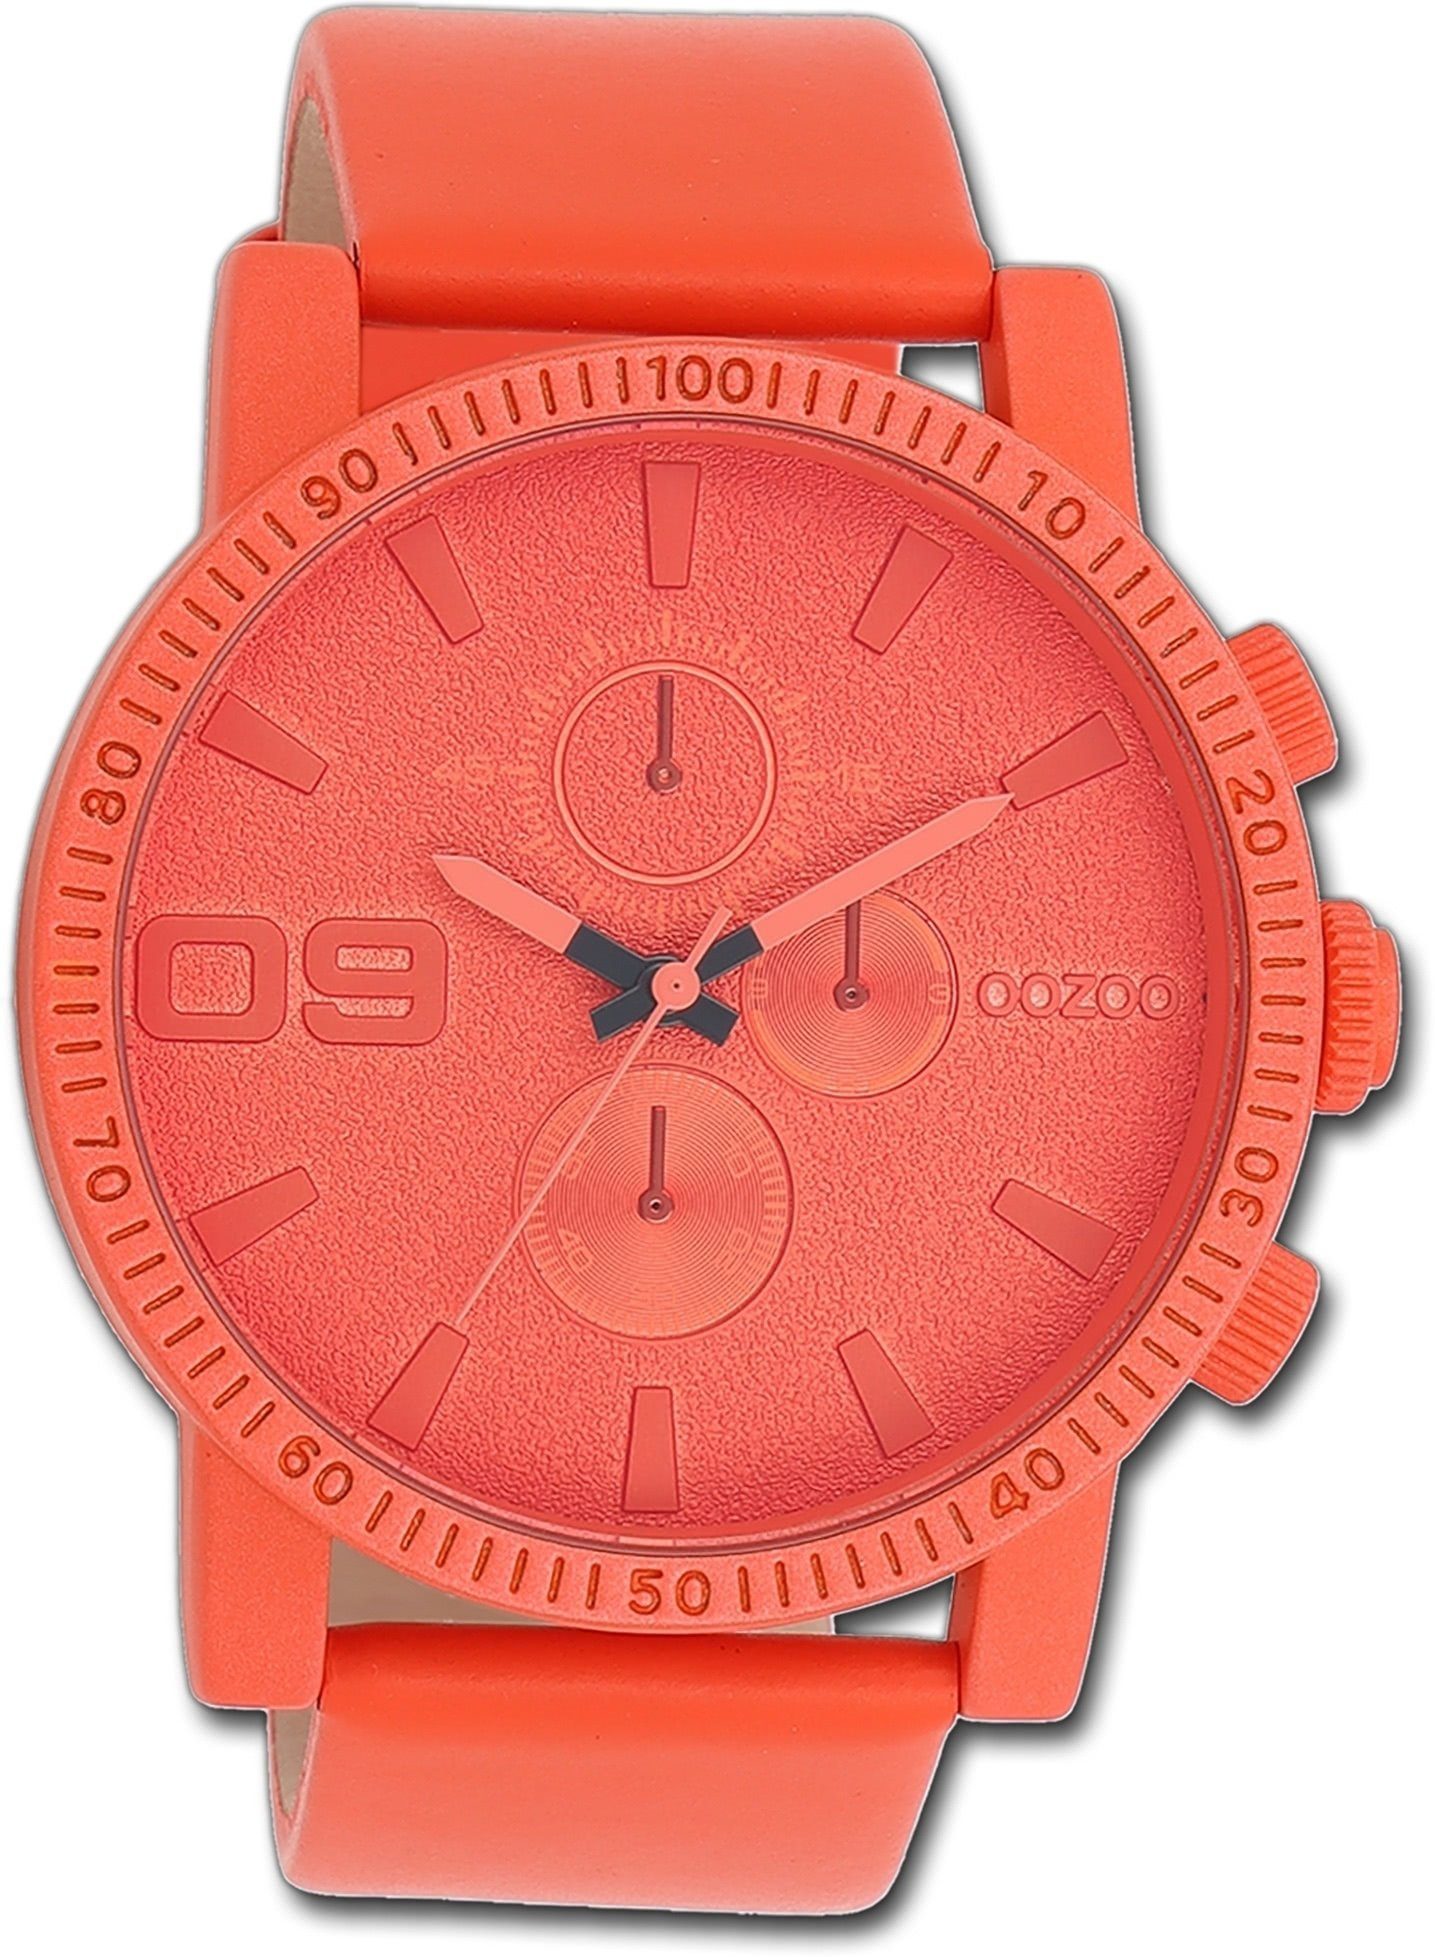 Herrenuhr orange, Oozoo rot, Unisex Armbanduhr Lederarmband Gehäuse, Quarzuhr groß Damen, rundes OOZOO (48mm) Timepieces,